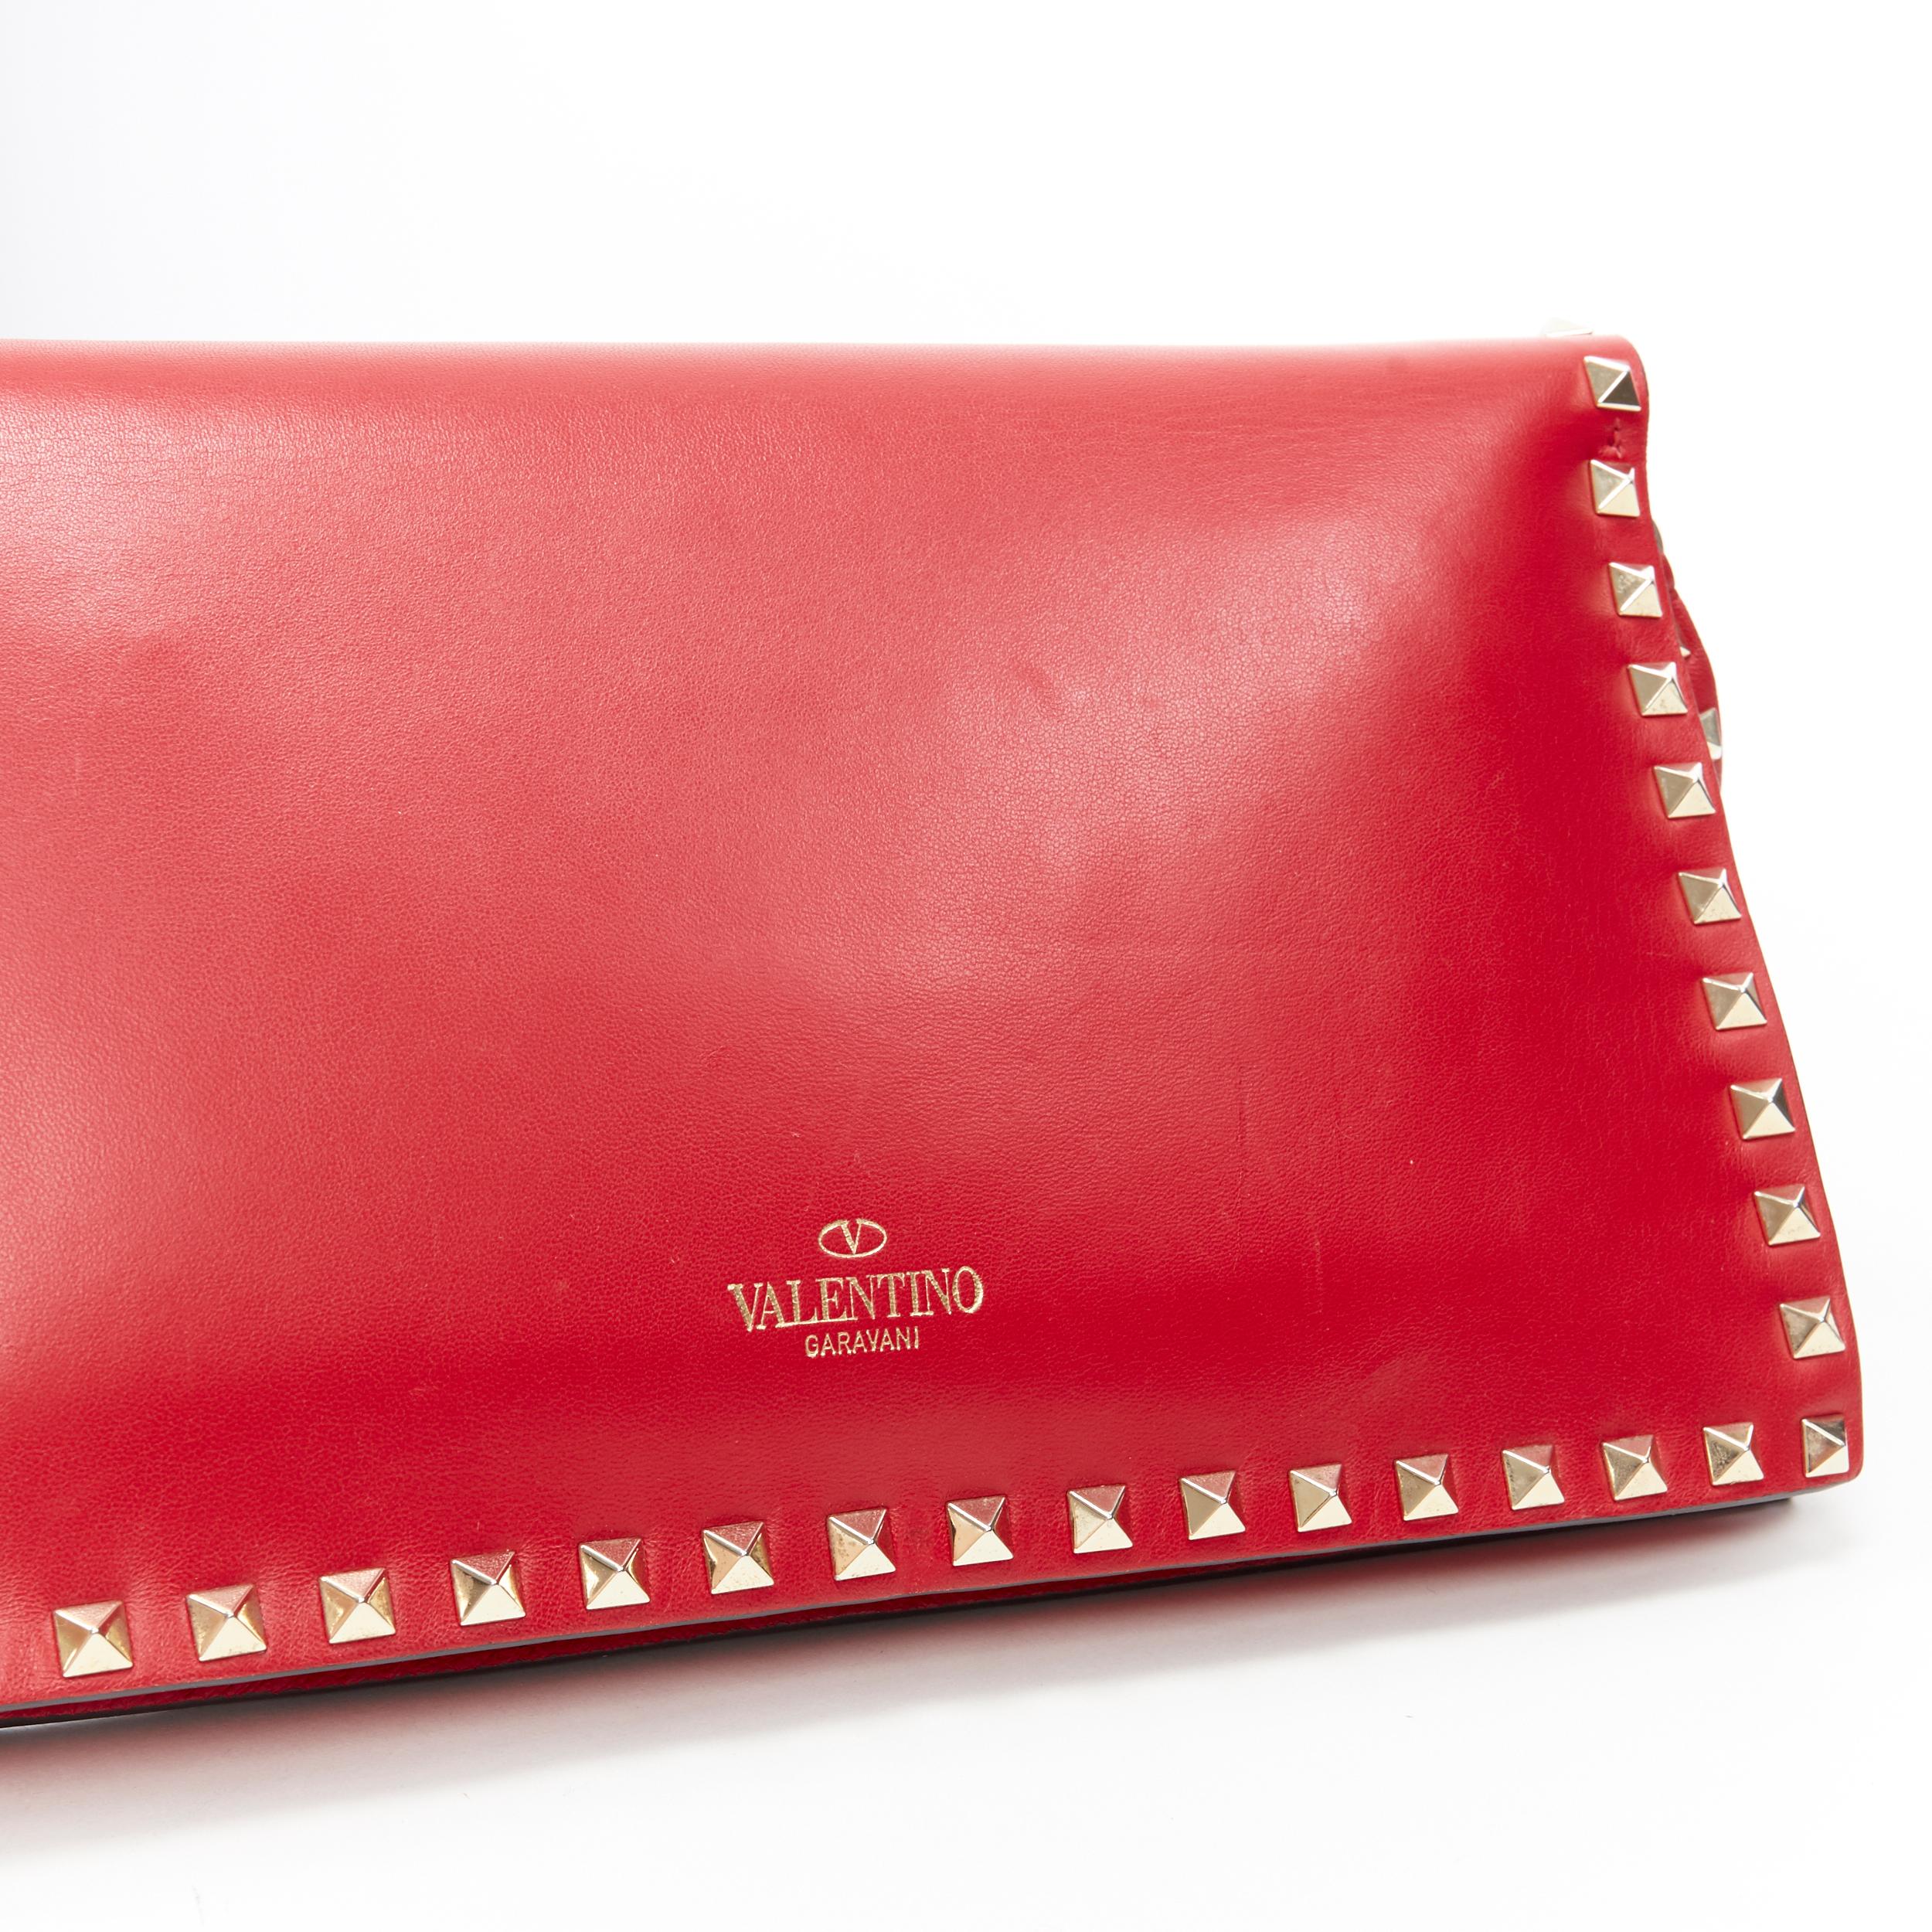 VALENTINO Rockstud red leather gold studded bordered wristlet flap clutch bag 4